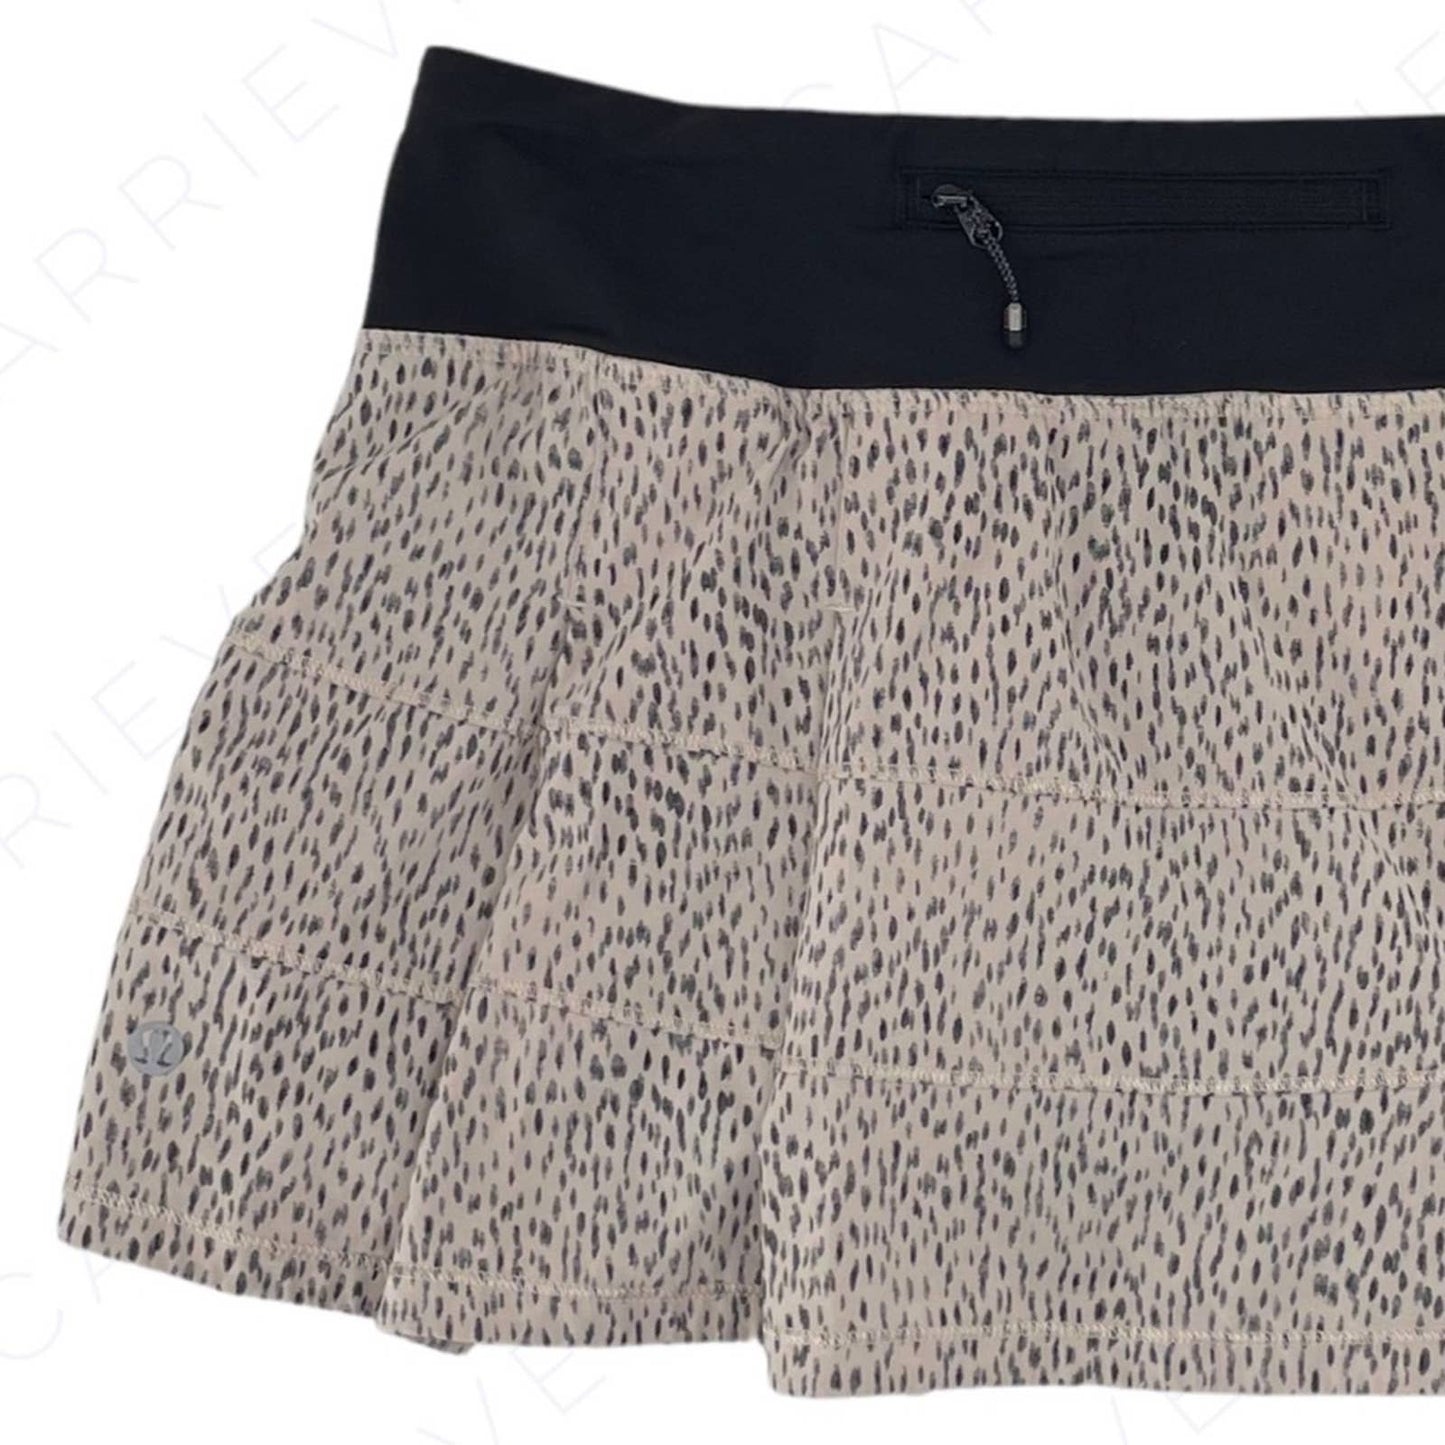 Lululemon Pace Rival Dottie Dash Grain Black Golf Tennis Skirt Skort Animal Size 6